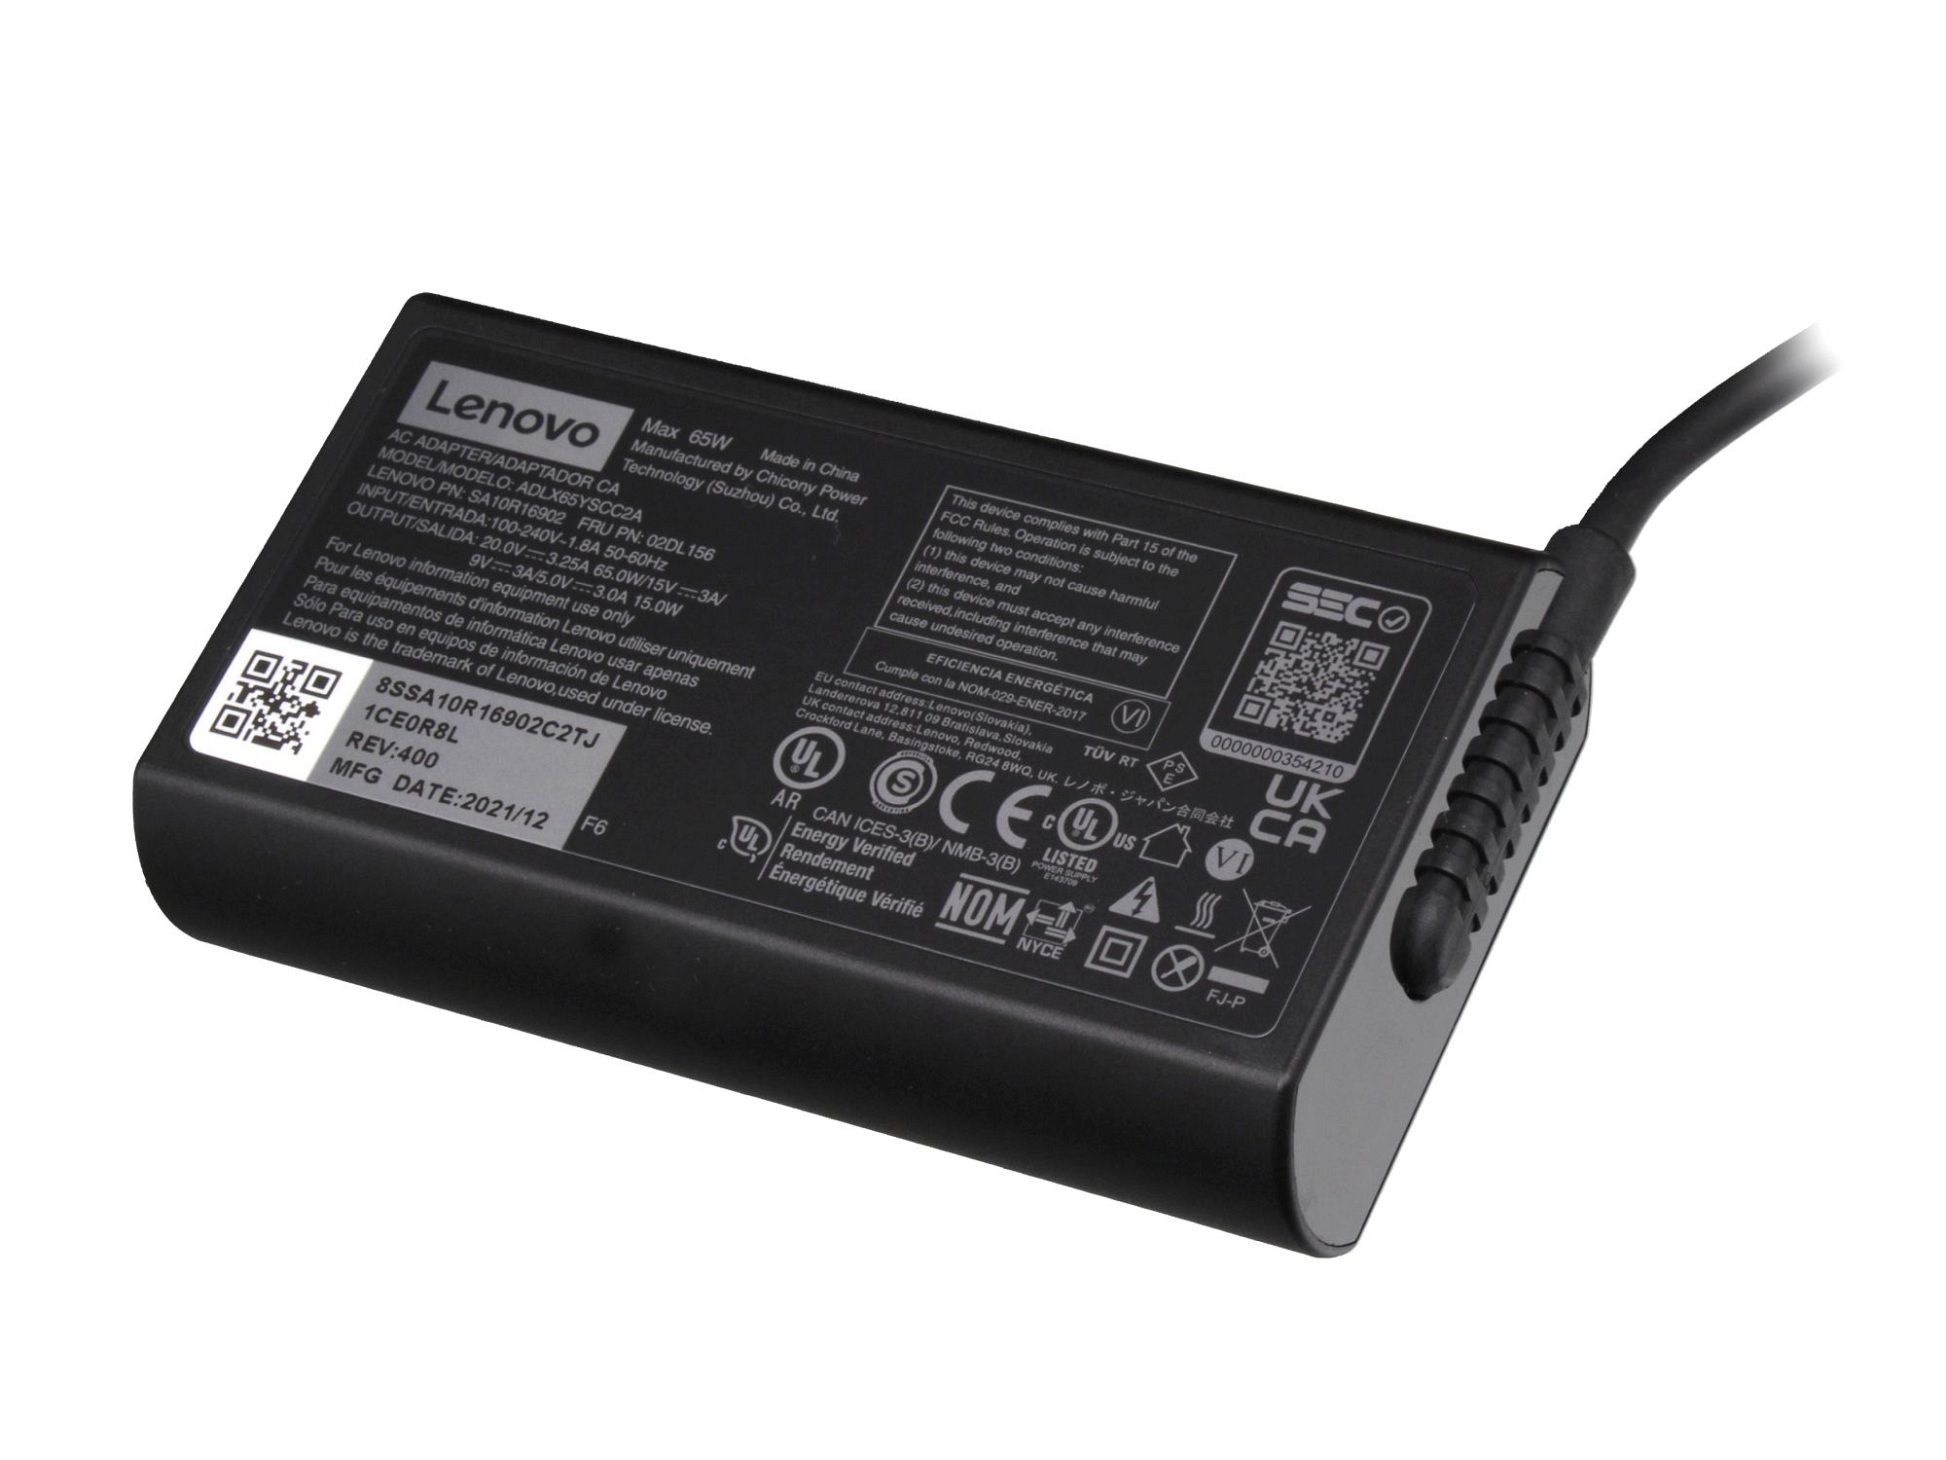 LENOVO ADLX65YSCC3A abgerundetes Original Netzteil USB-C 65 Watt